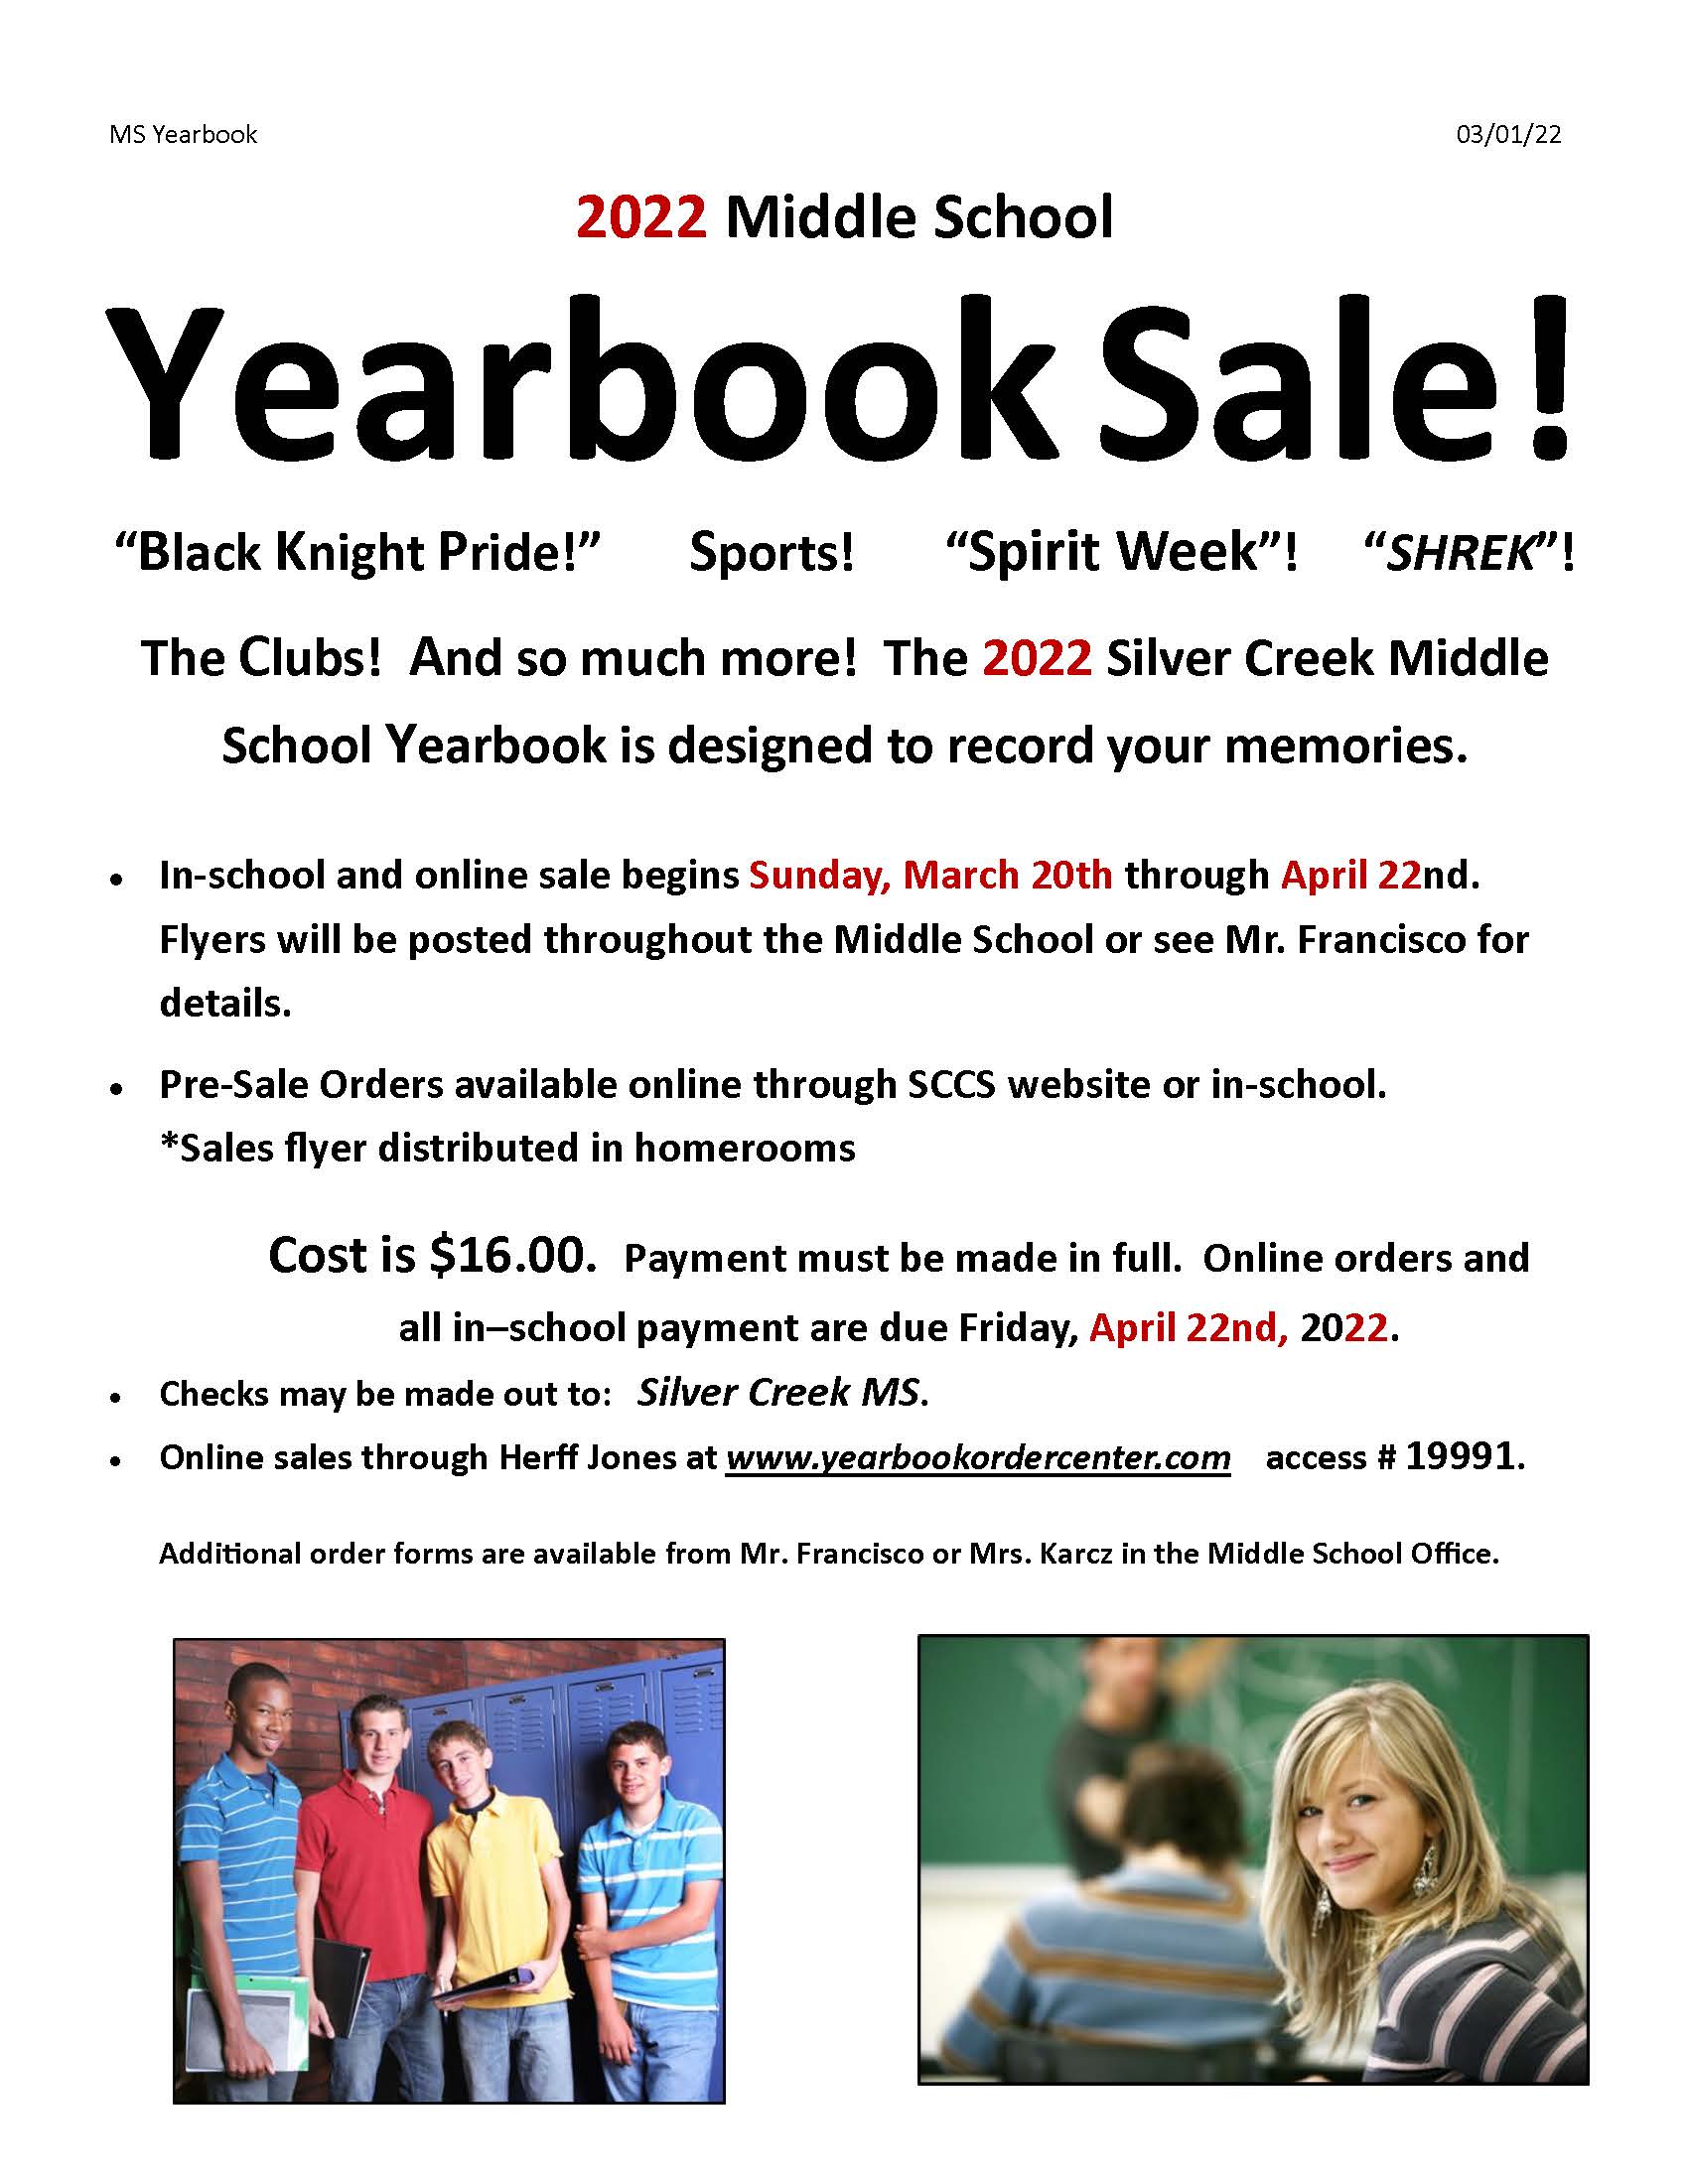 Yearbook Sale flyer